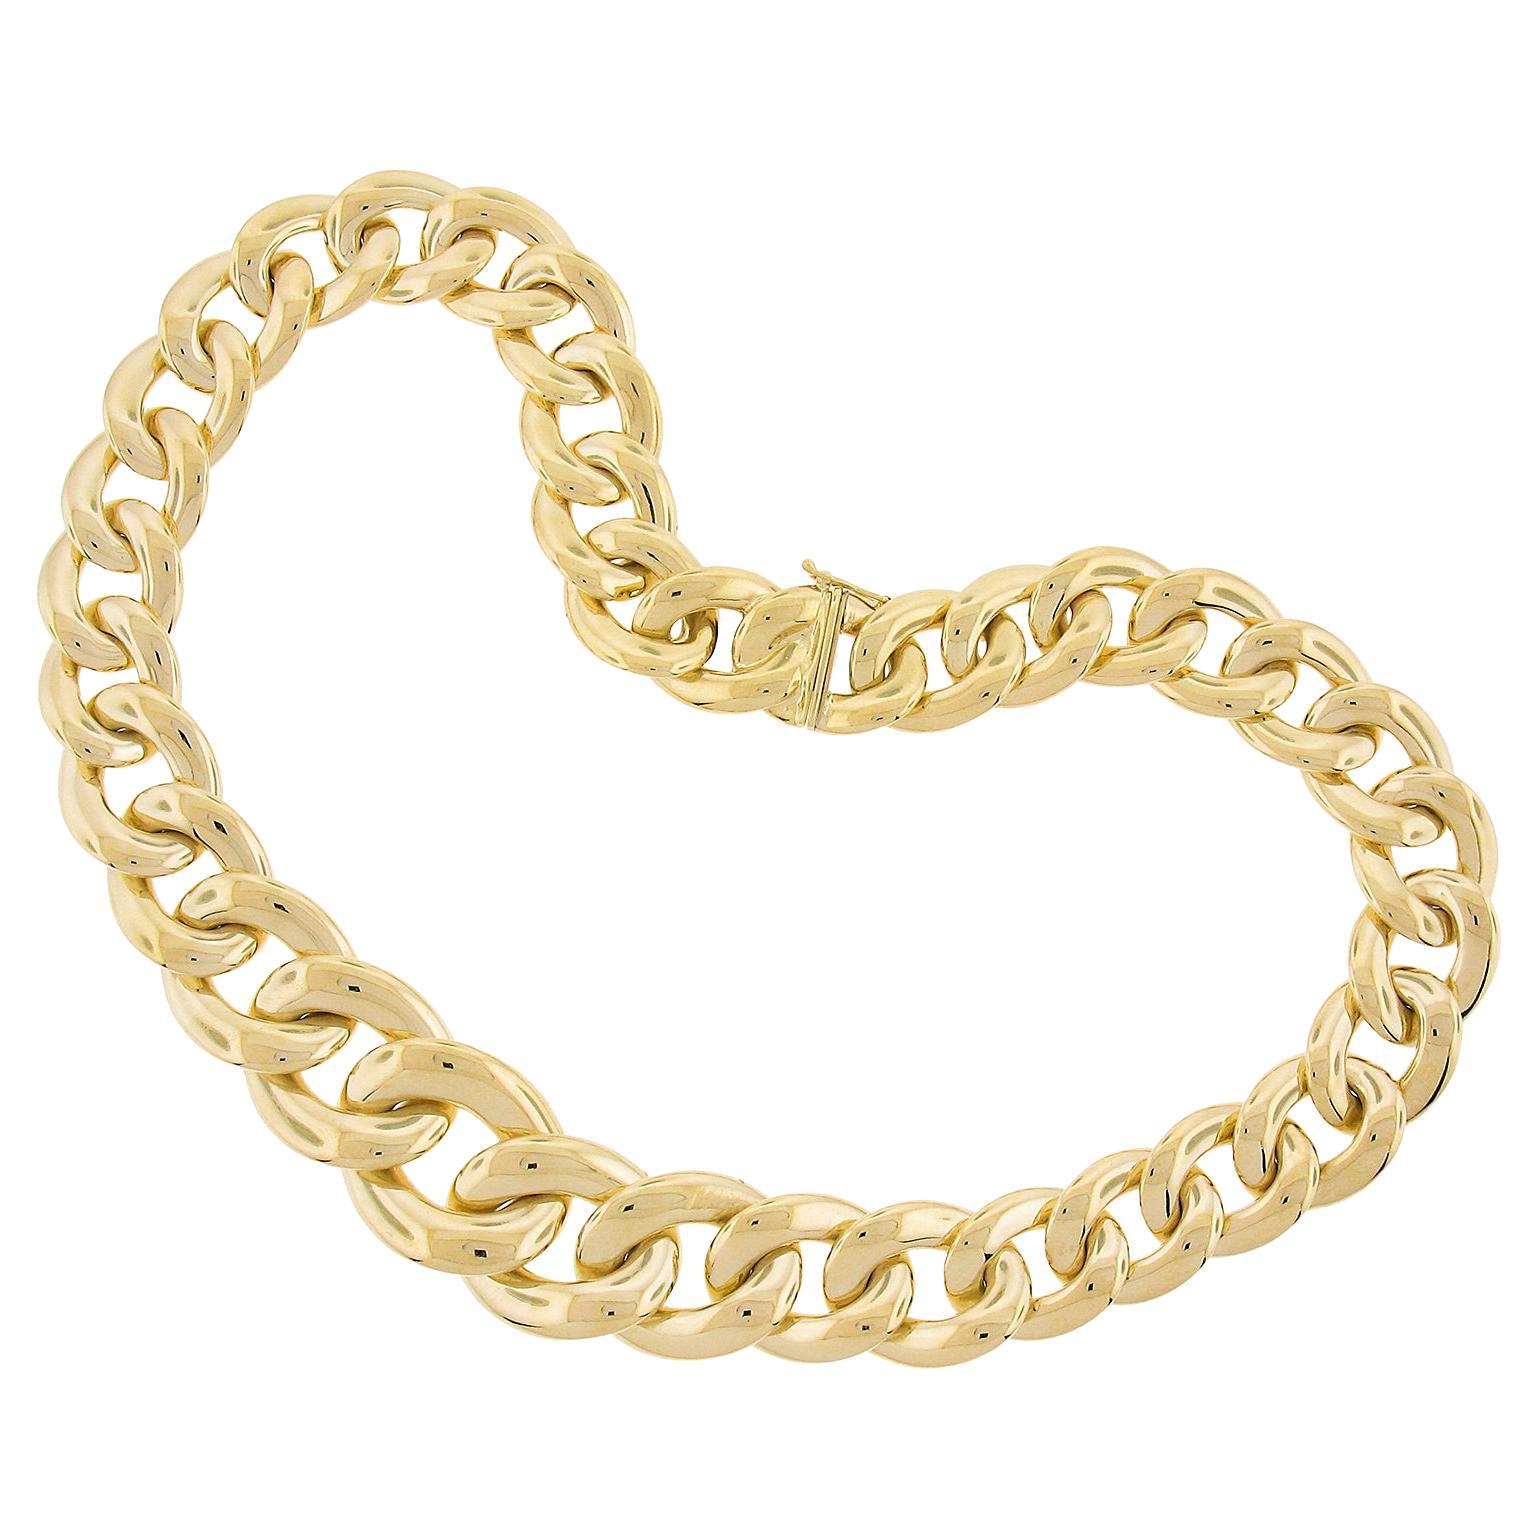 Italian 14k Yellow Gold 17" Graduated Polished Flat Curb Link Choker Necklace